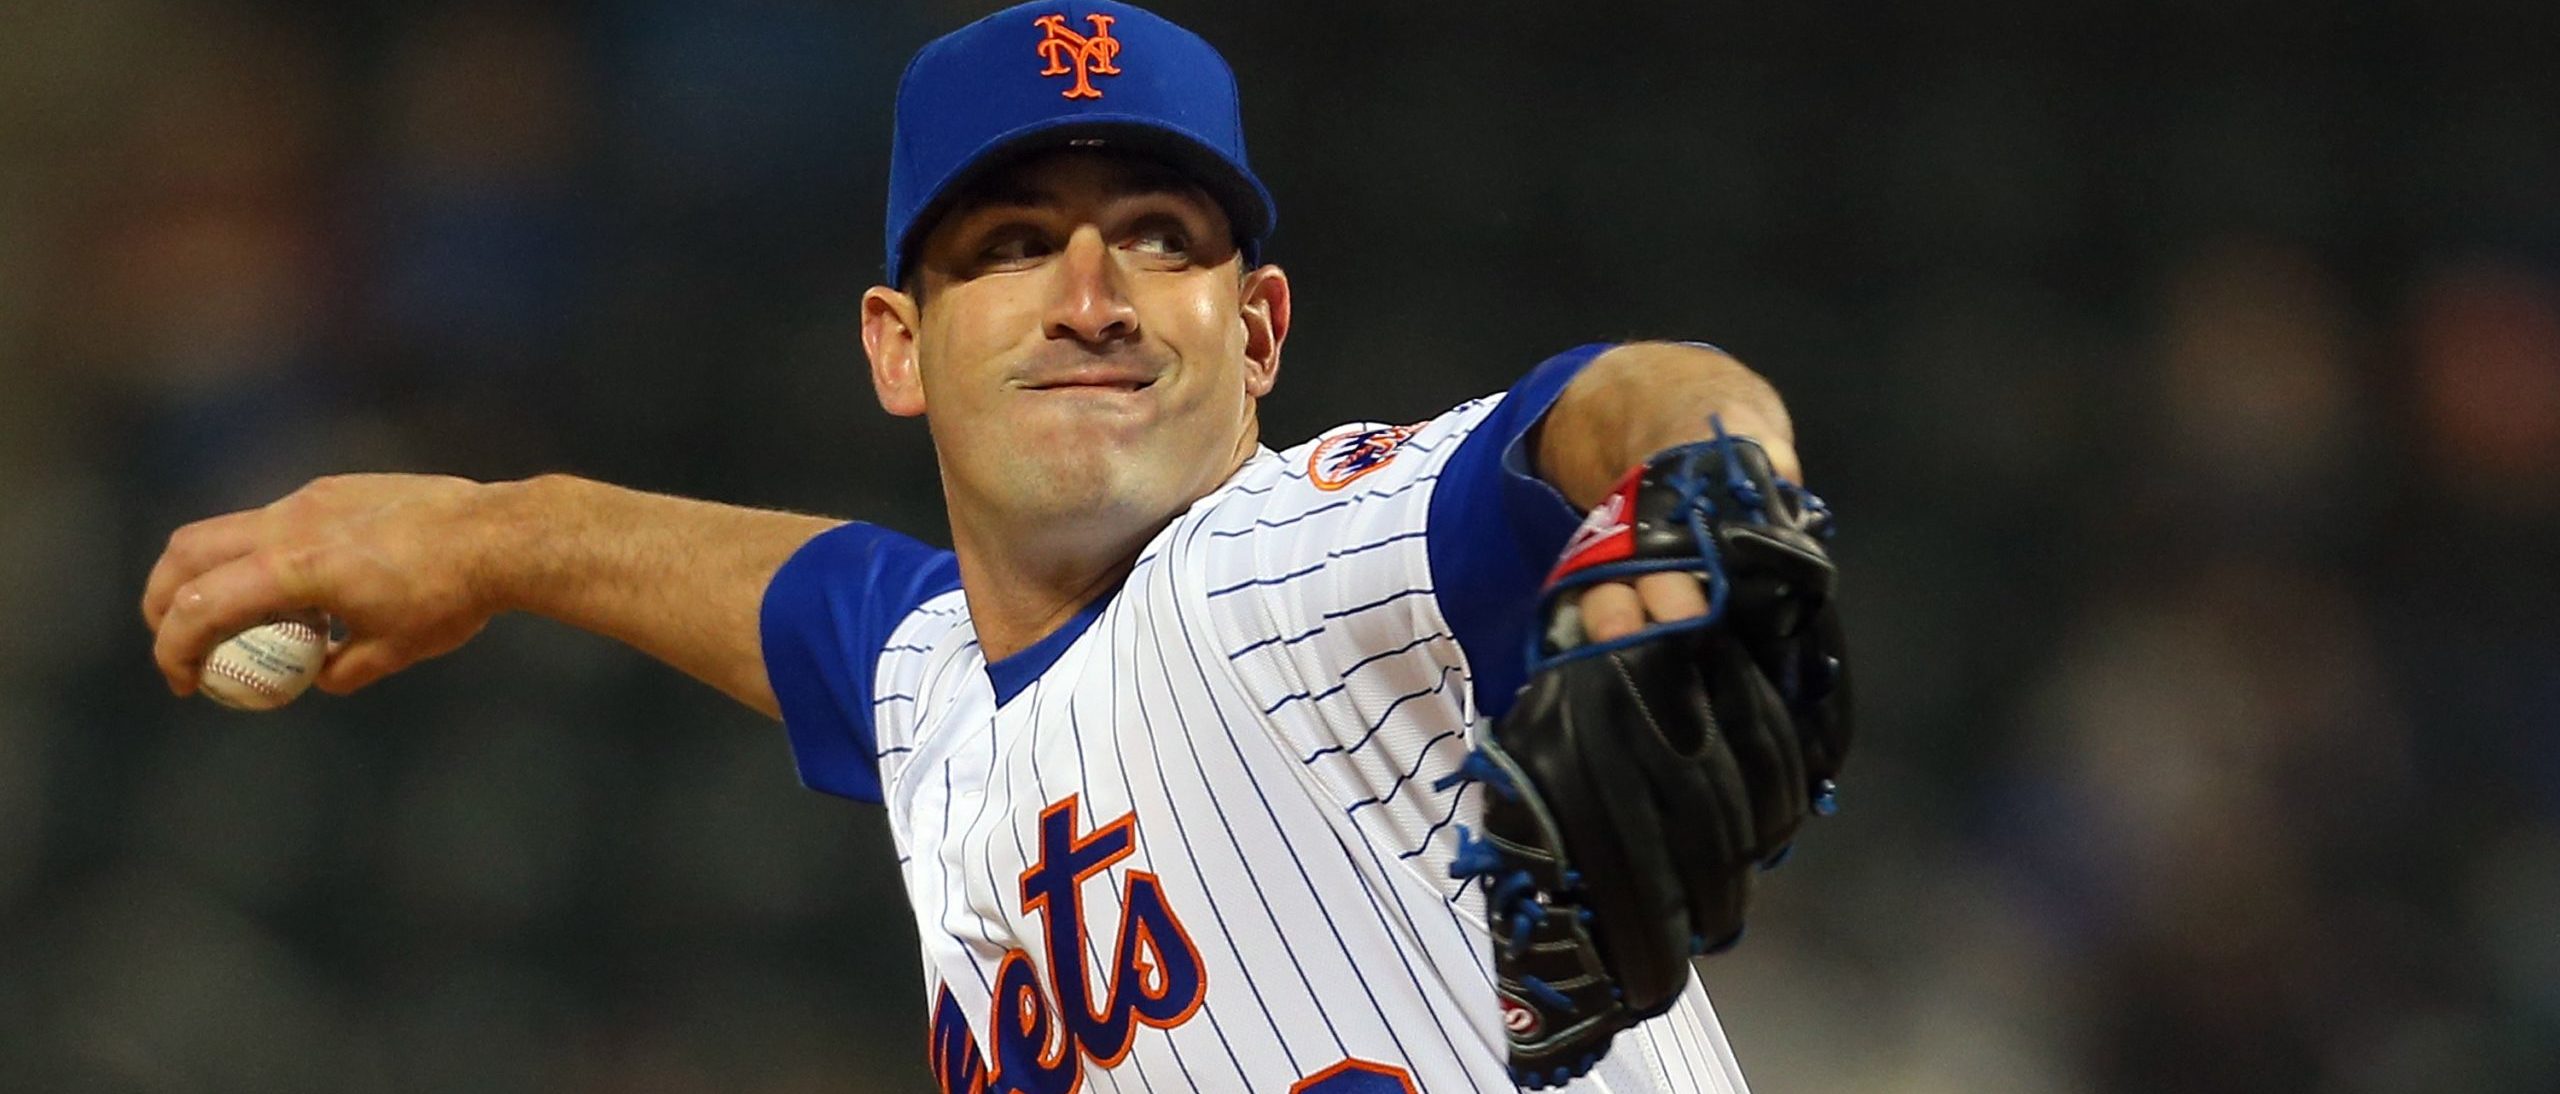 Former New York Mets pitcher Matt Harvey announces retirement from